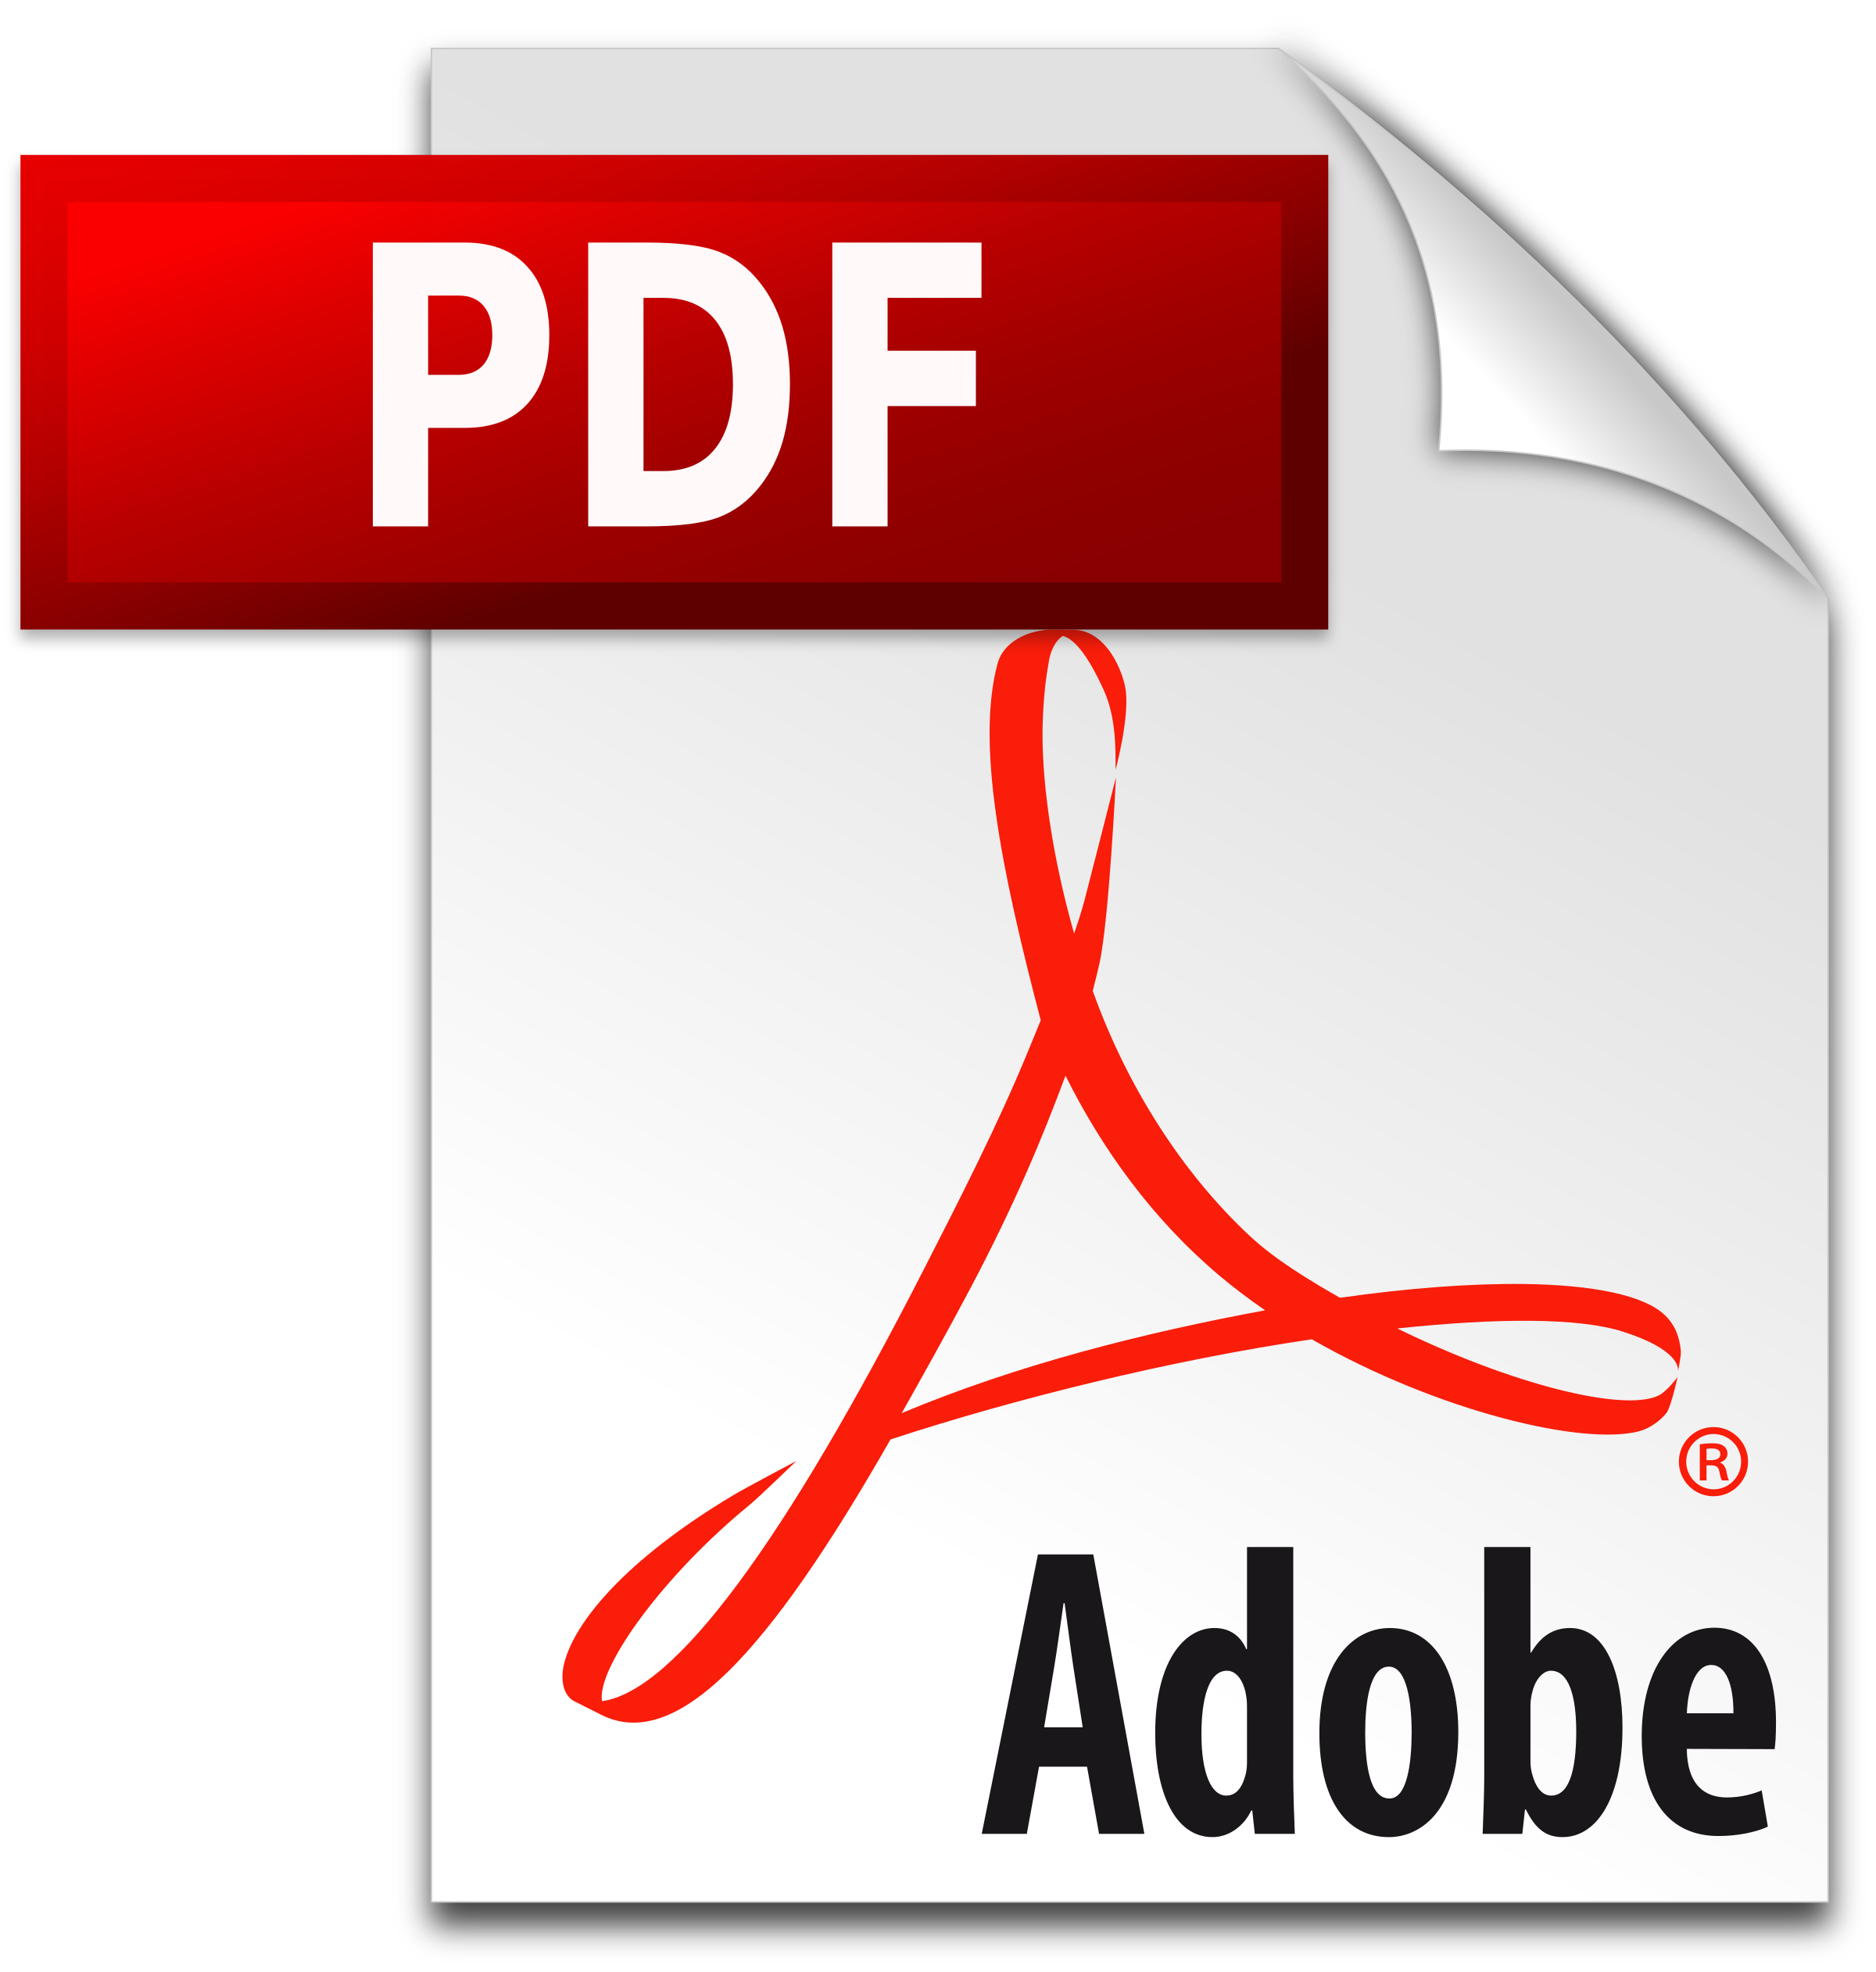 /cms/uploads/image/file/500658/adobe-pdf-icon-logo-png-transparent.png